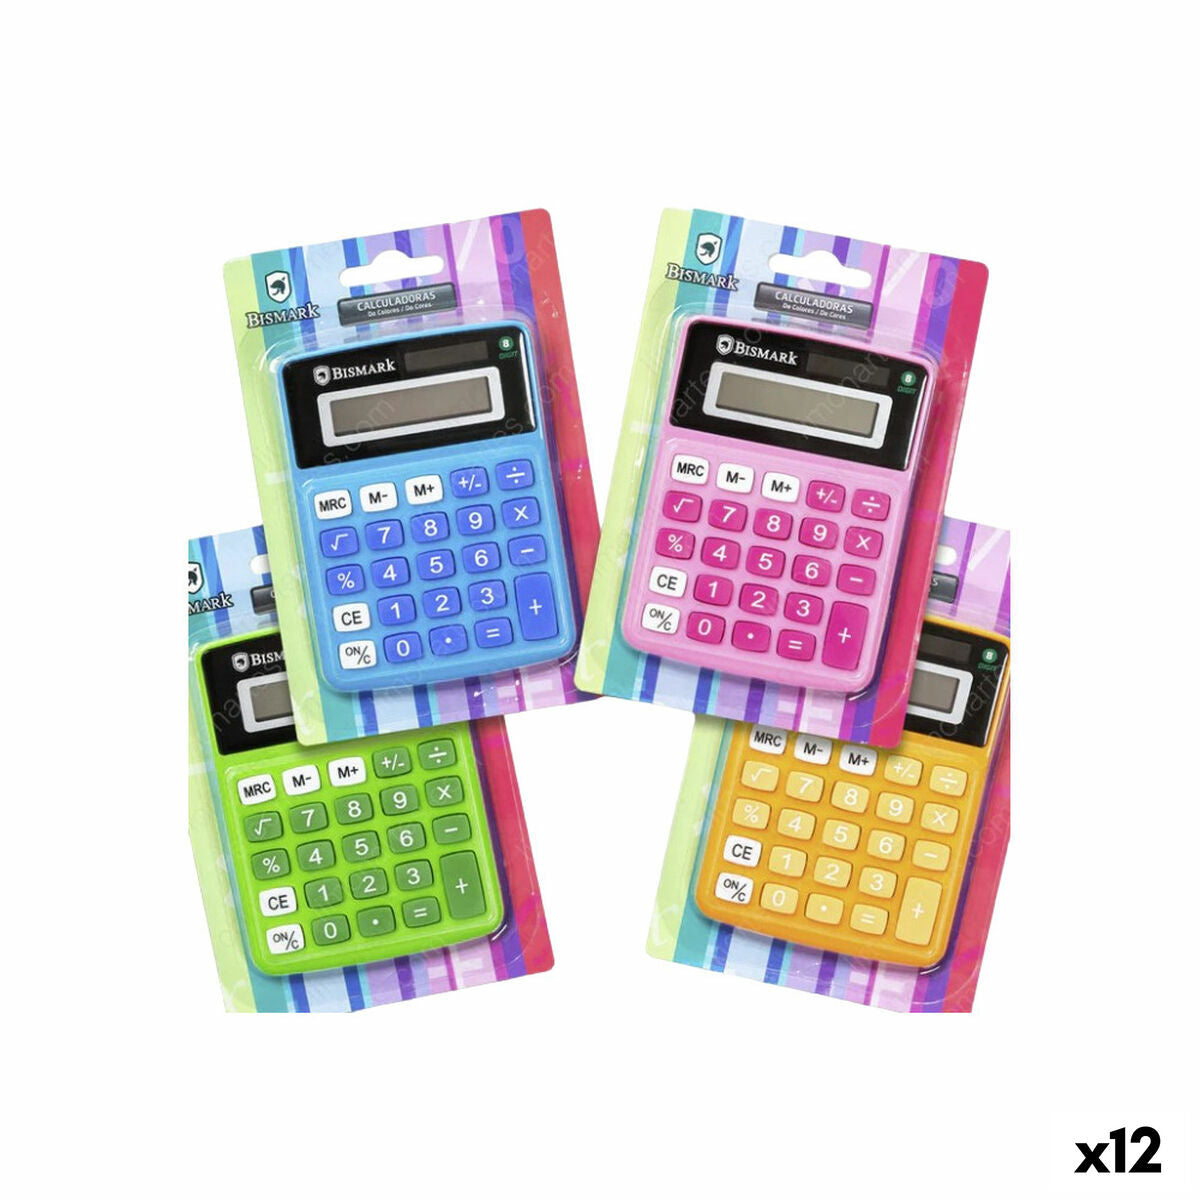 Calculator Bismark (12 Units)